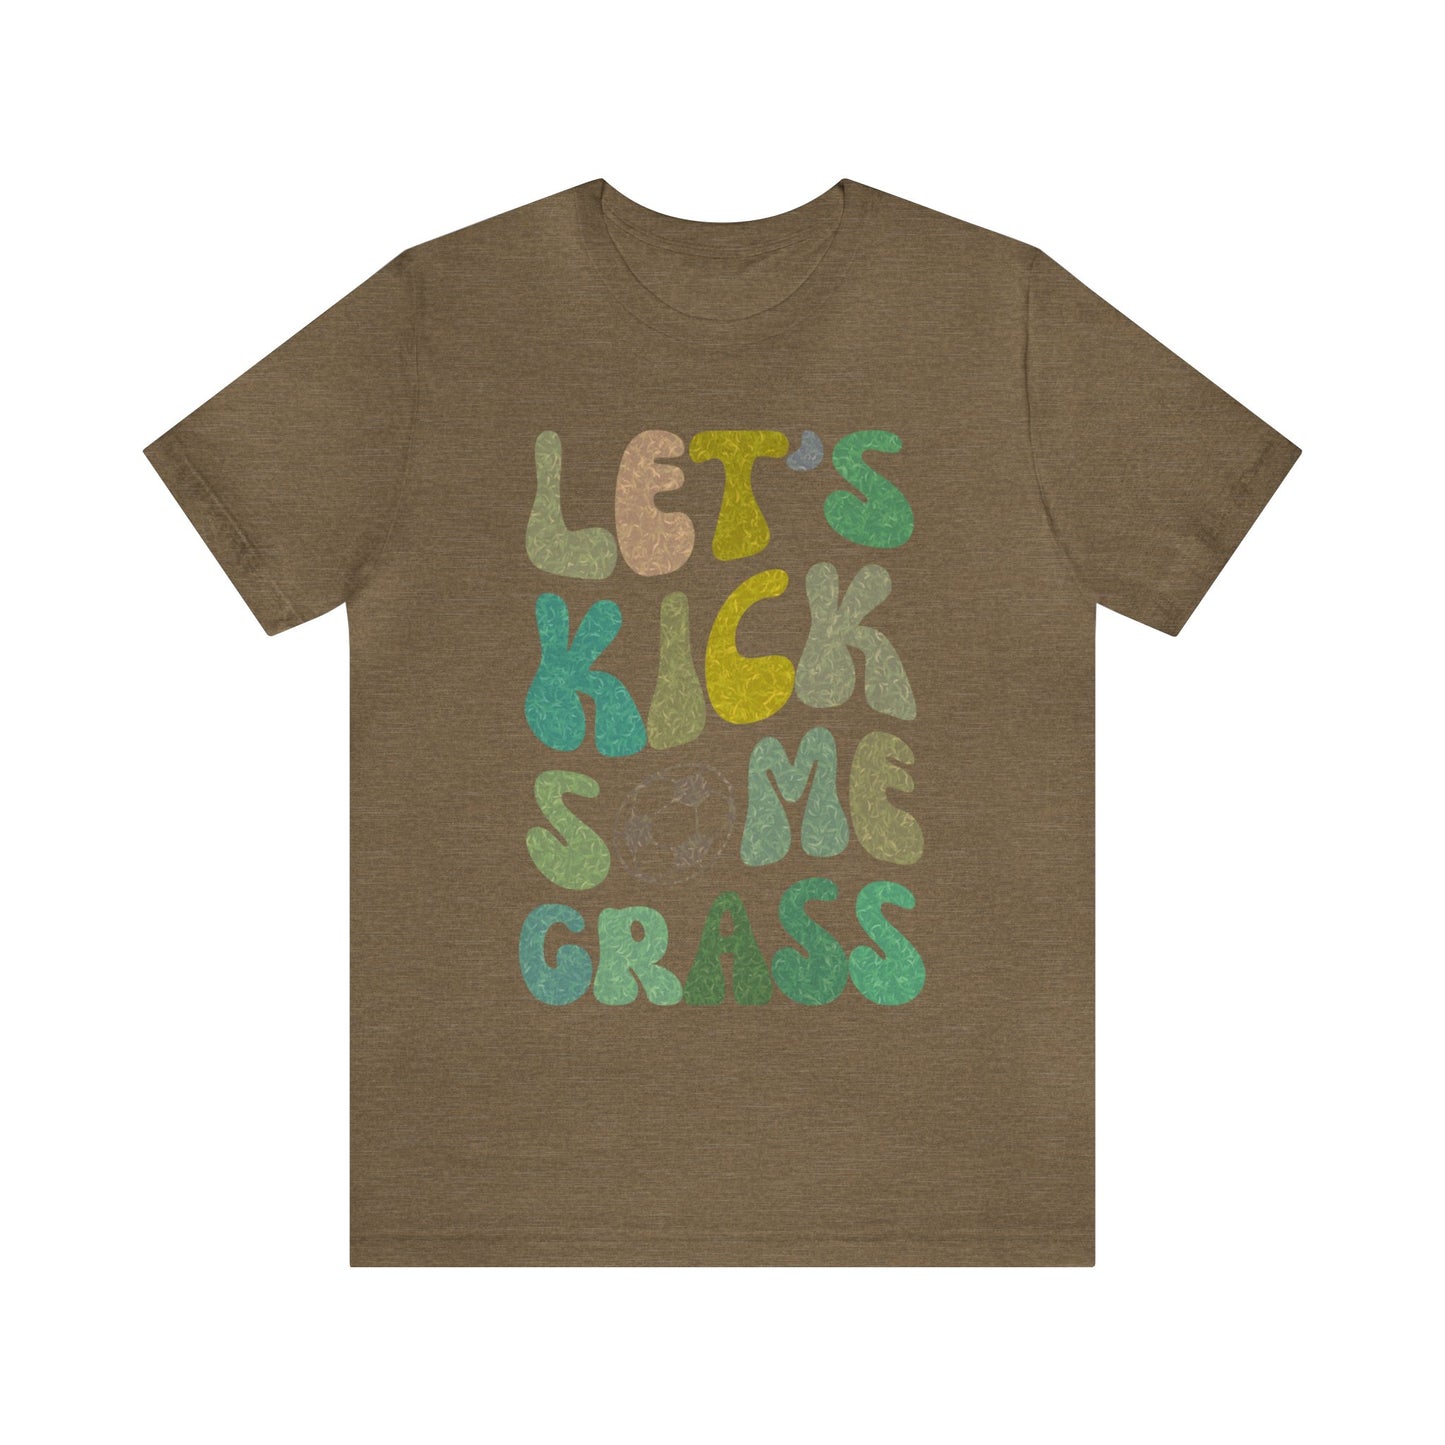 Let's Kick Some Grass Shirt, Sports Women Shirt, Shirt for Soccer Player, Soccer Player Shirt, Soccer Mom Shirt, Game Day Shirt, T1457